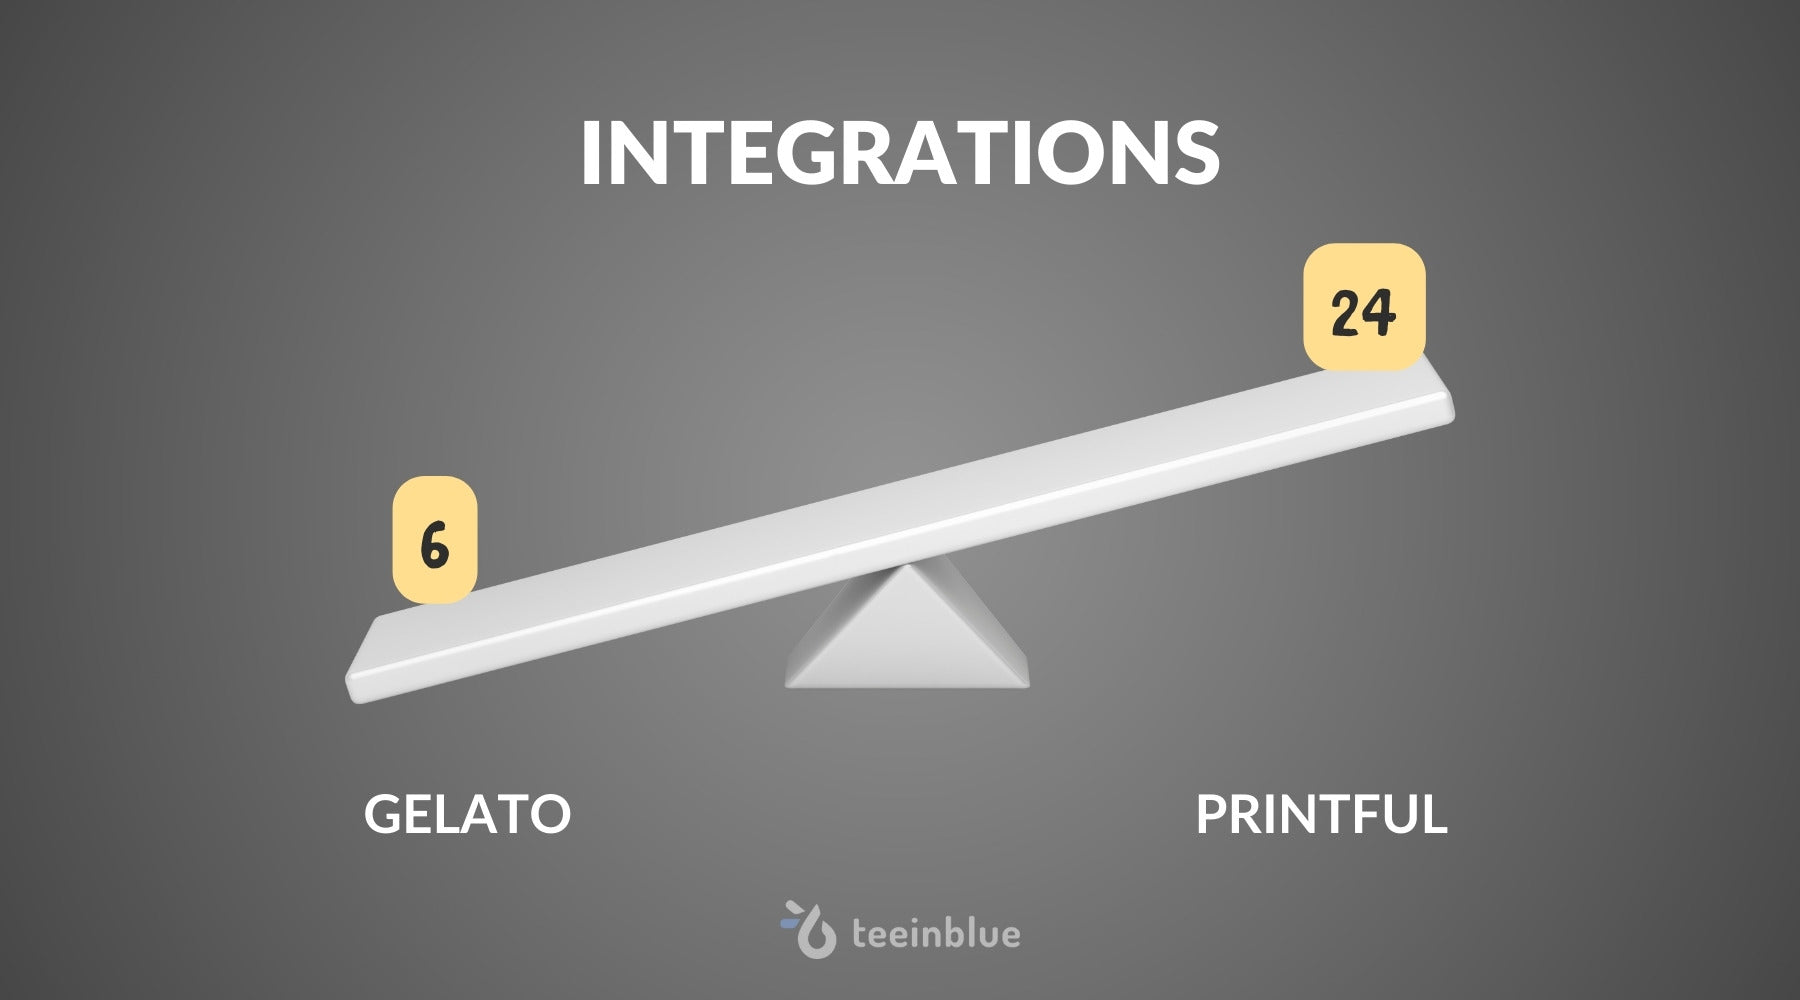 Gelato vs Printful integrations and tools